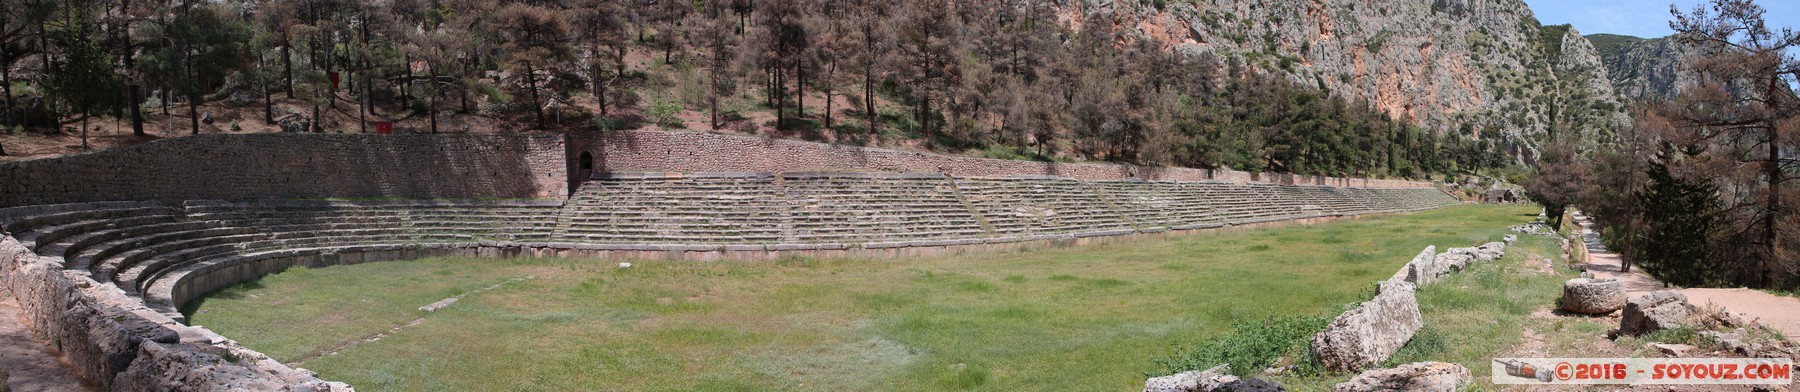 Archaeological site of Delphi - Stadium - panorama
Stitched Panorama
Mots-clés: Delfi Delphi GRC Grèce Delphes Ruines grec patrimoine unesco Phocis Stade Stadium panorama